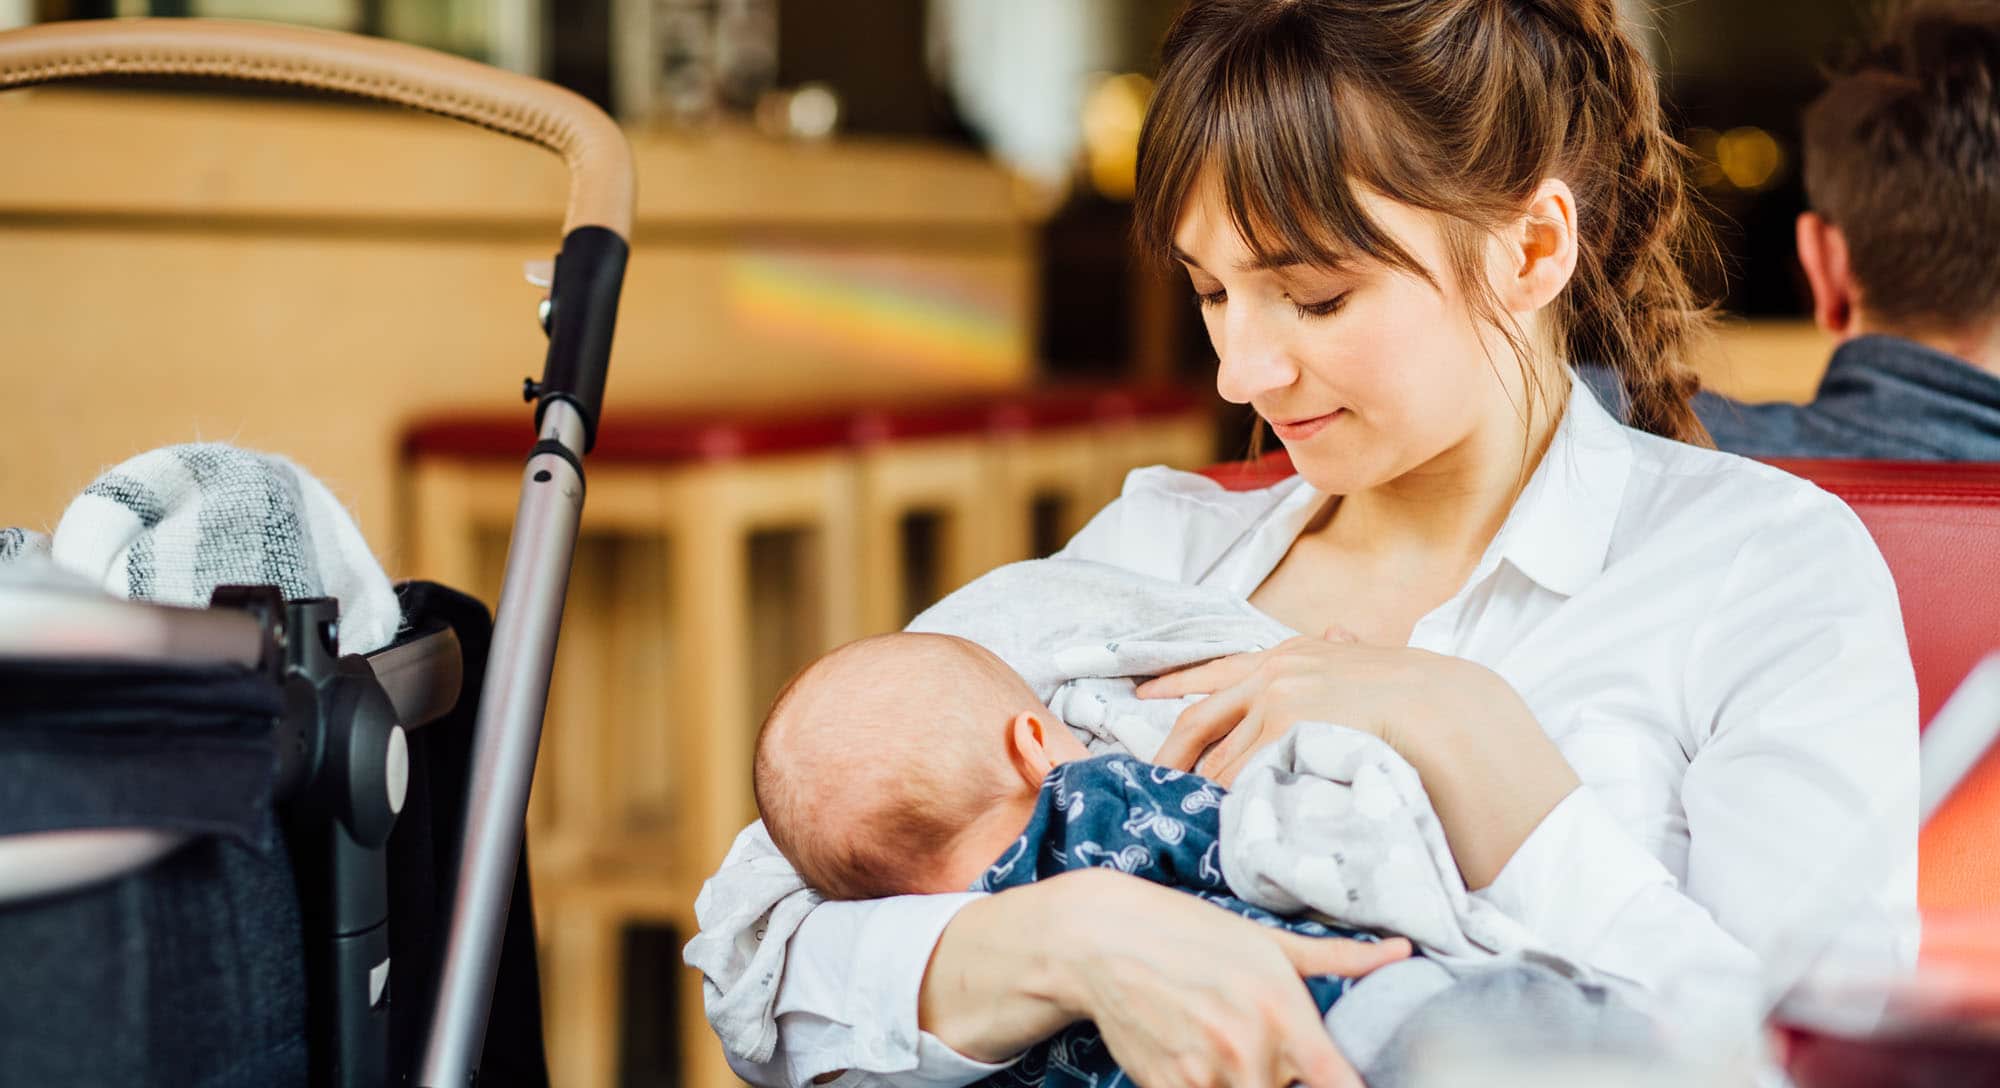 breastfeeding - Tips to Make Breastfeeding Relaxing and Enjoyable